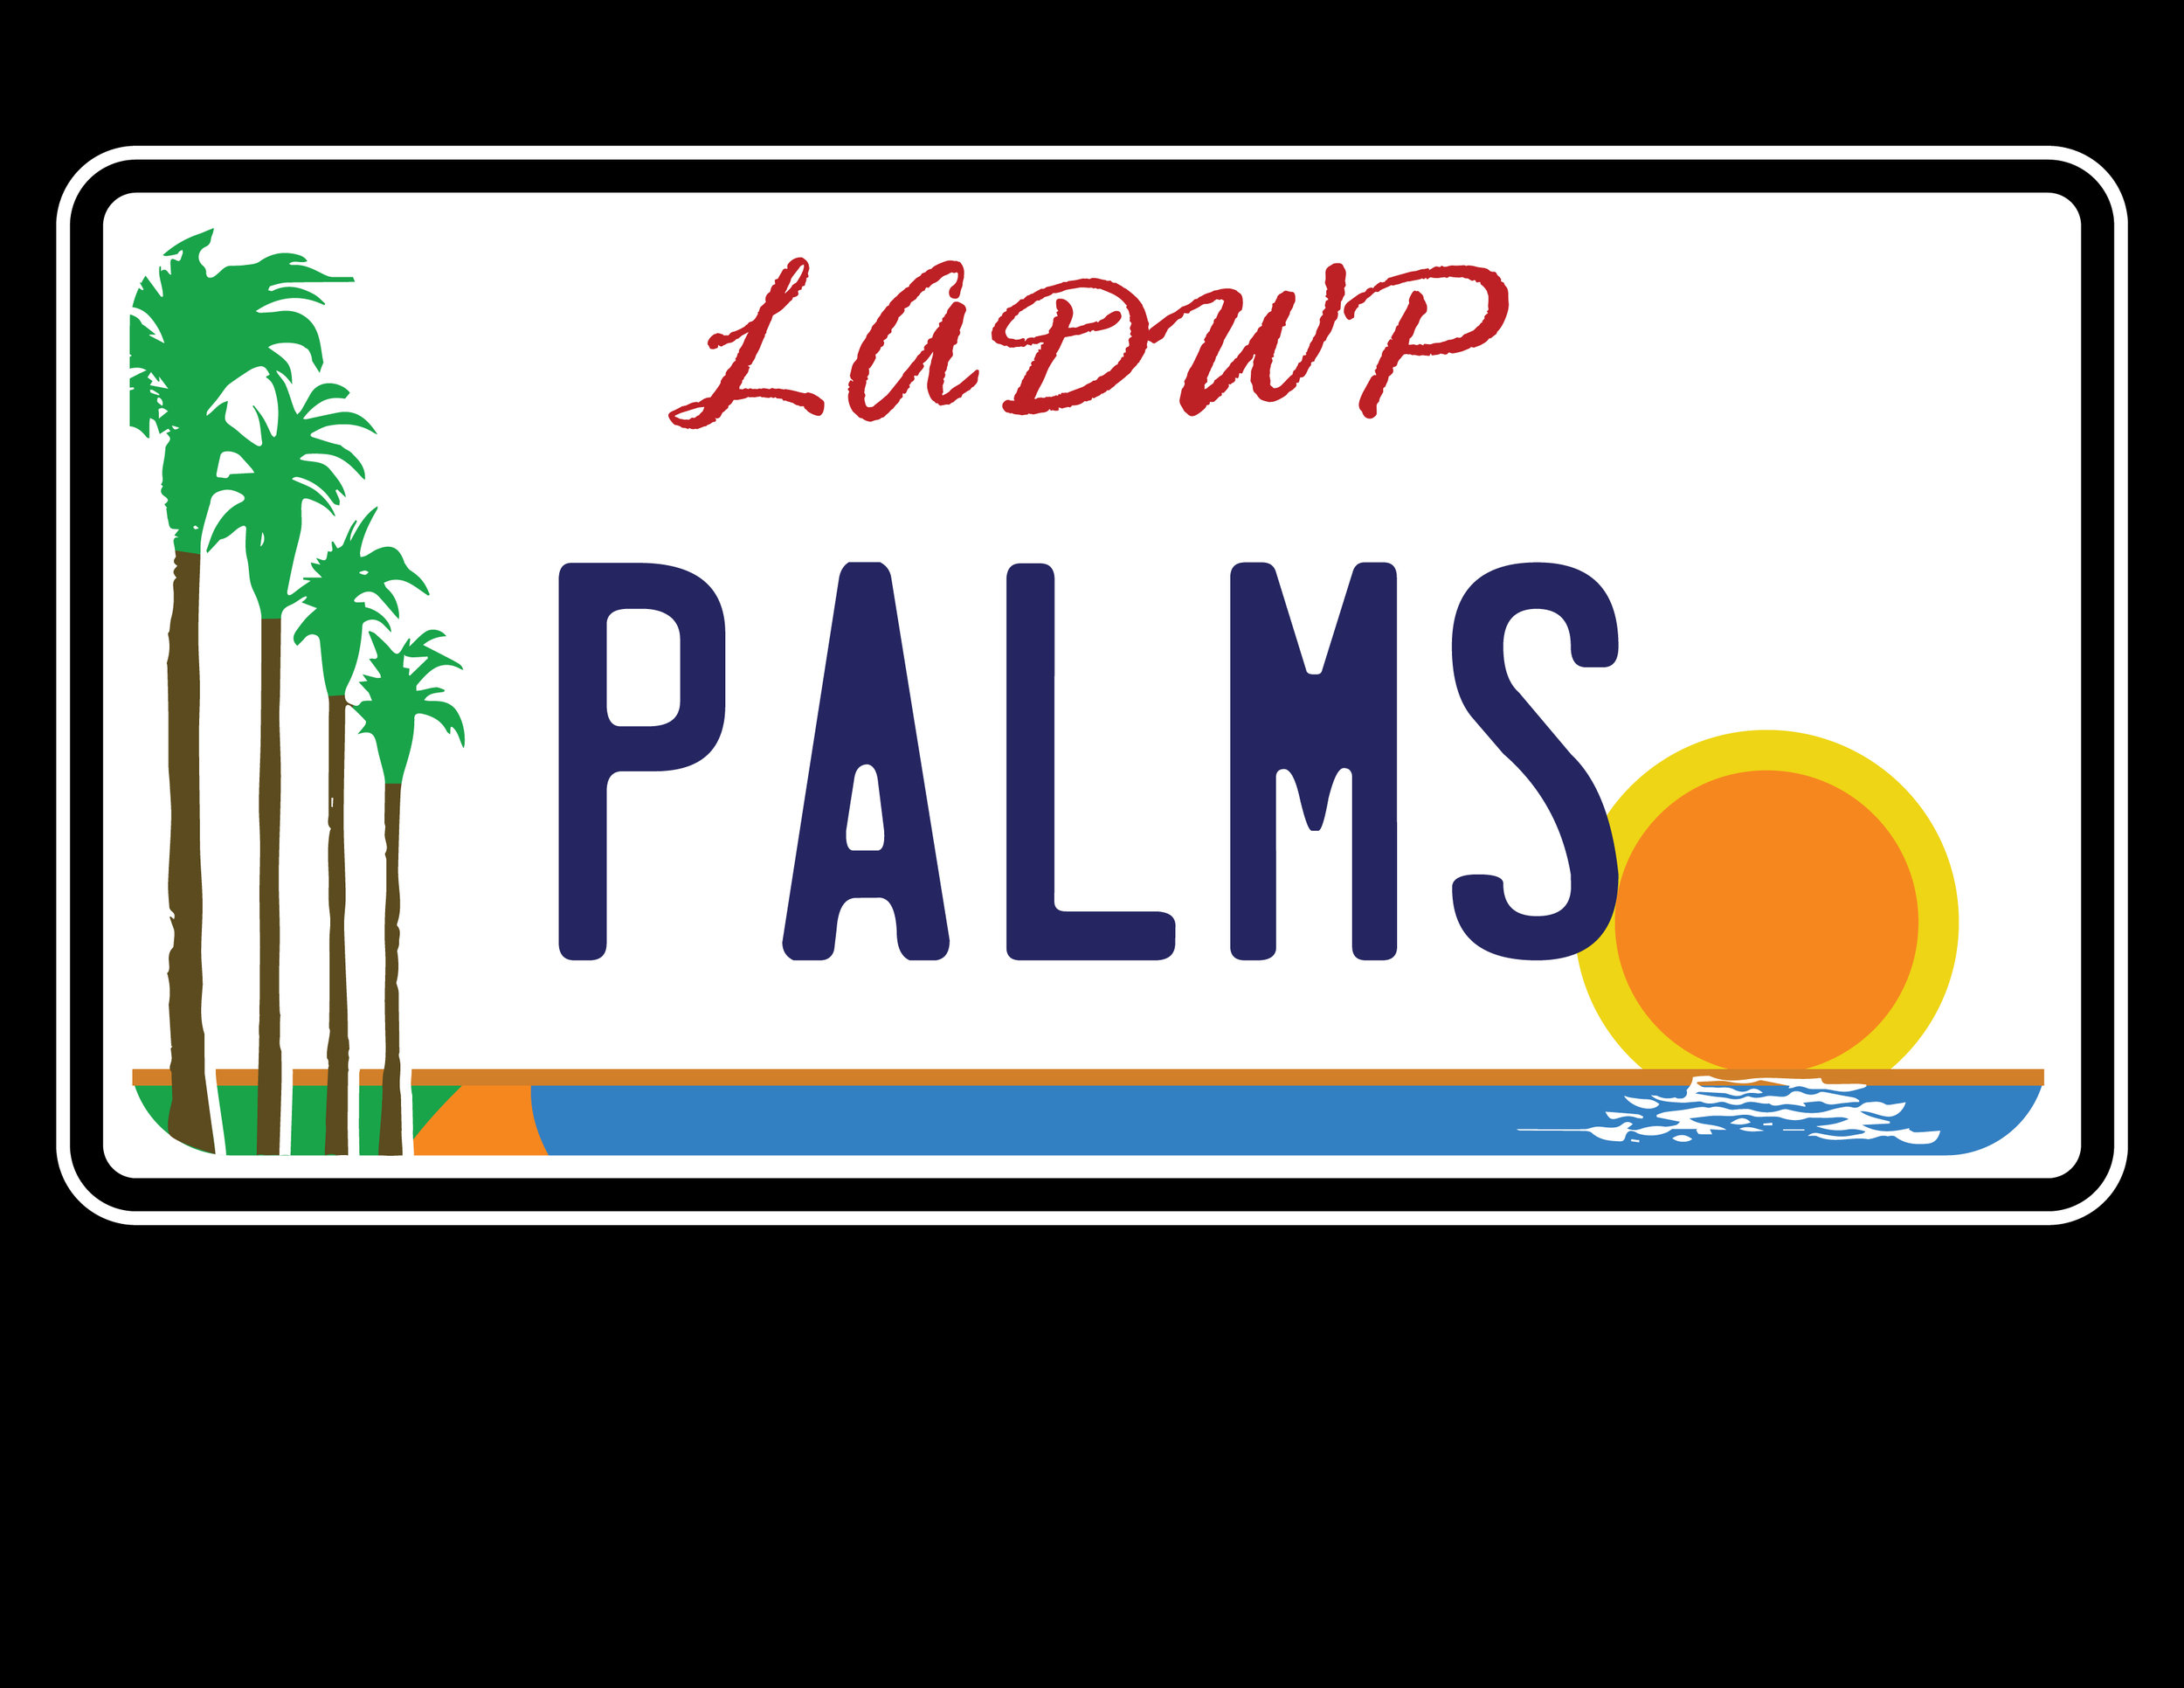 Palms_LADWP.jpg